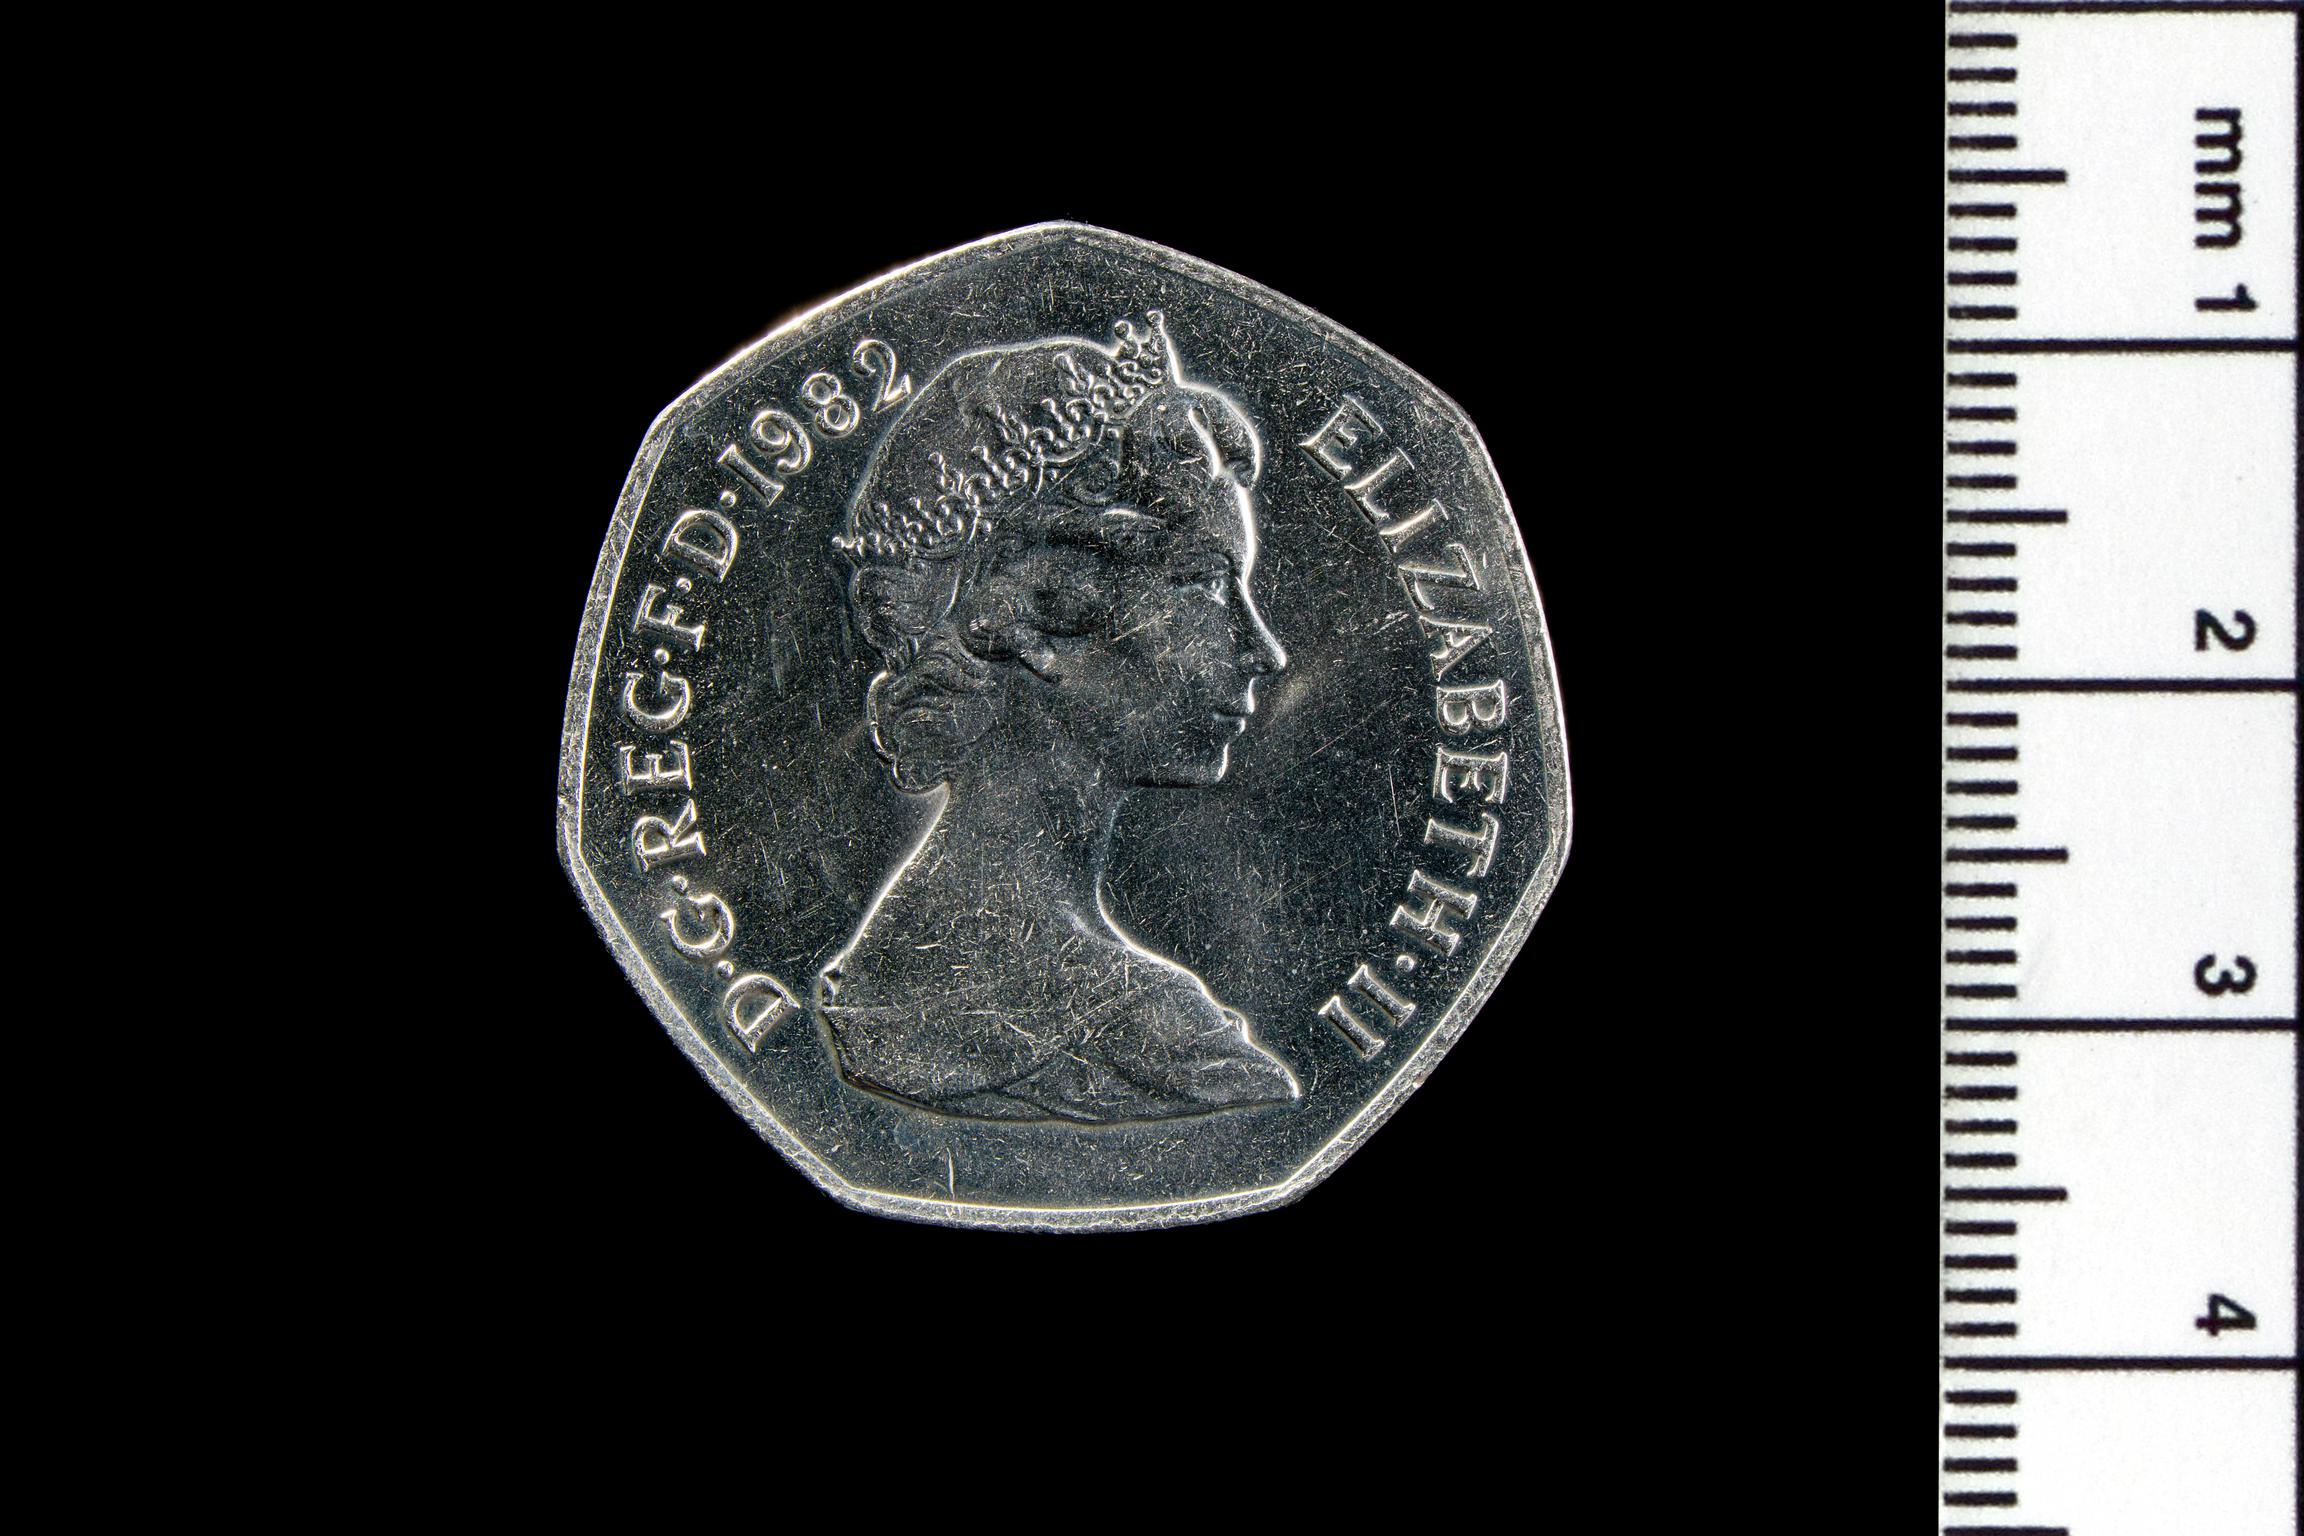 Elizabeth II fifty pence